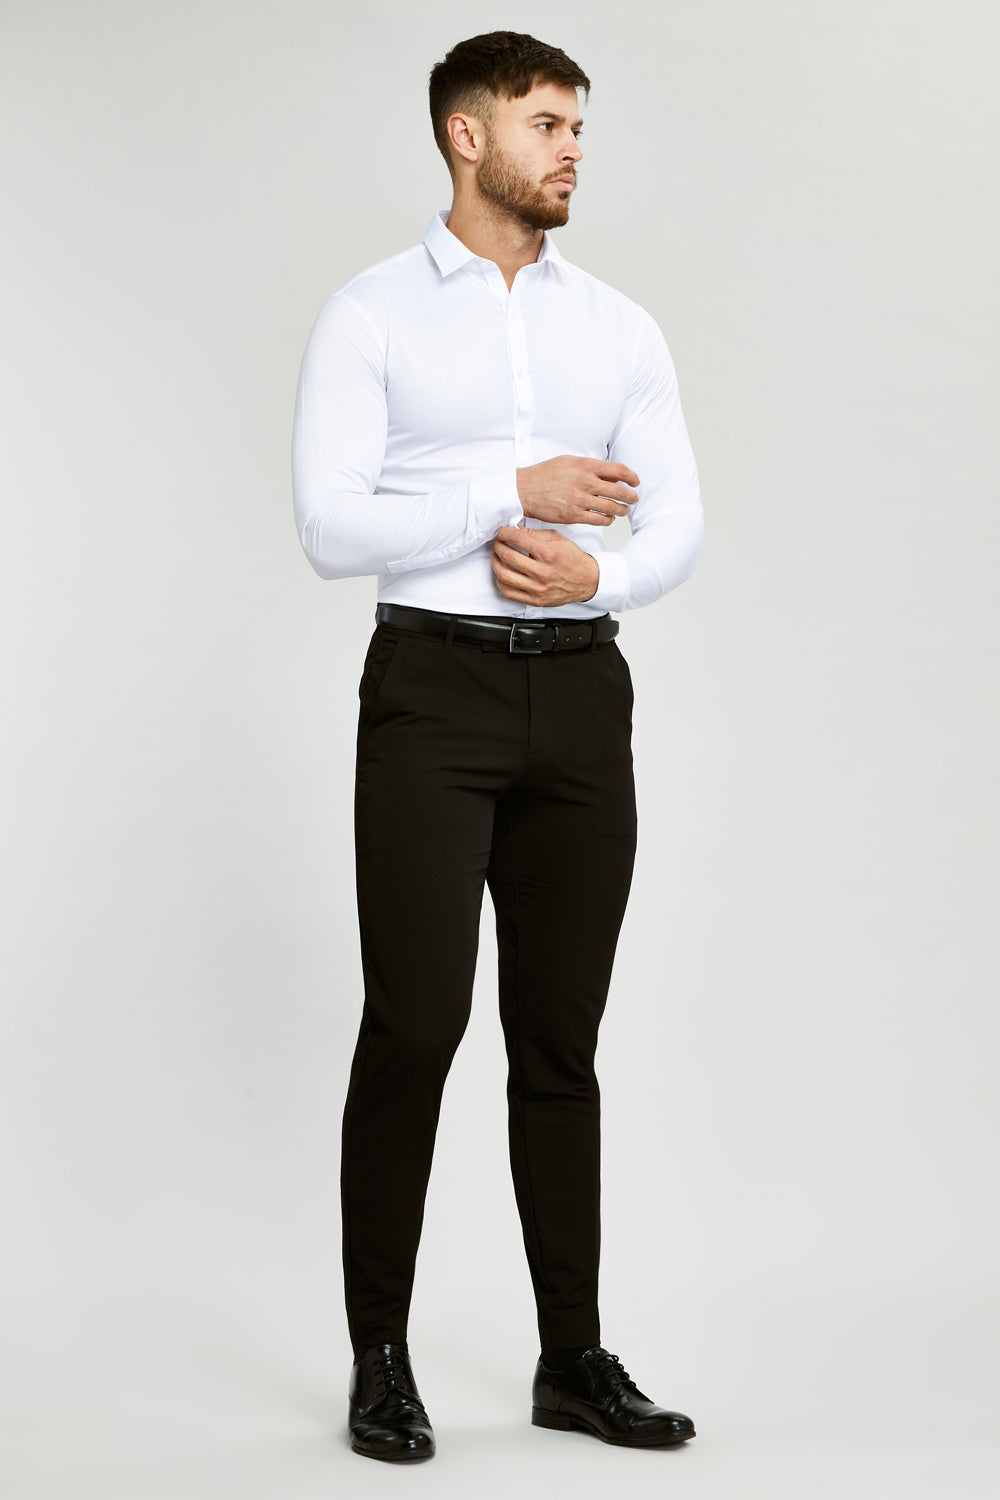 60 Dashing Formal Shirt And Pant Combinations For Men | Shirt and pants  combinations for men, Shirt outfit men, Blue pants men